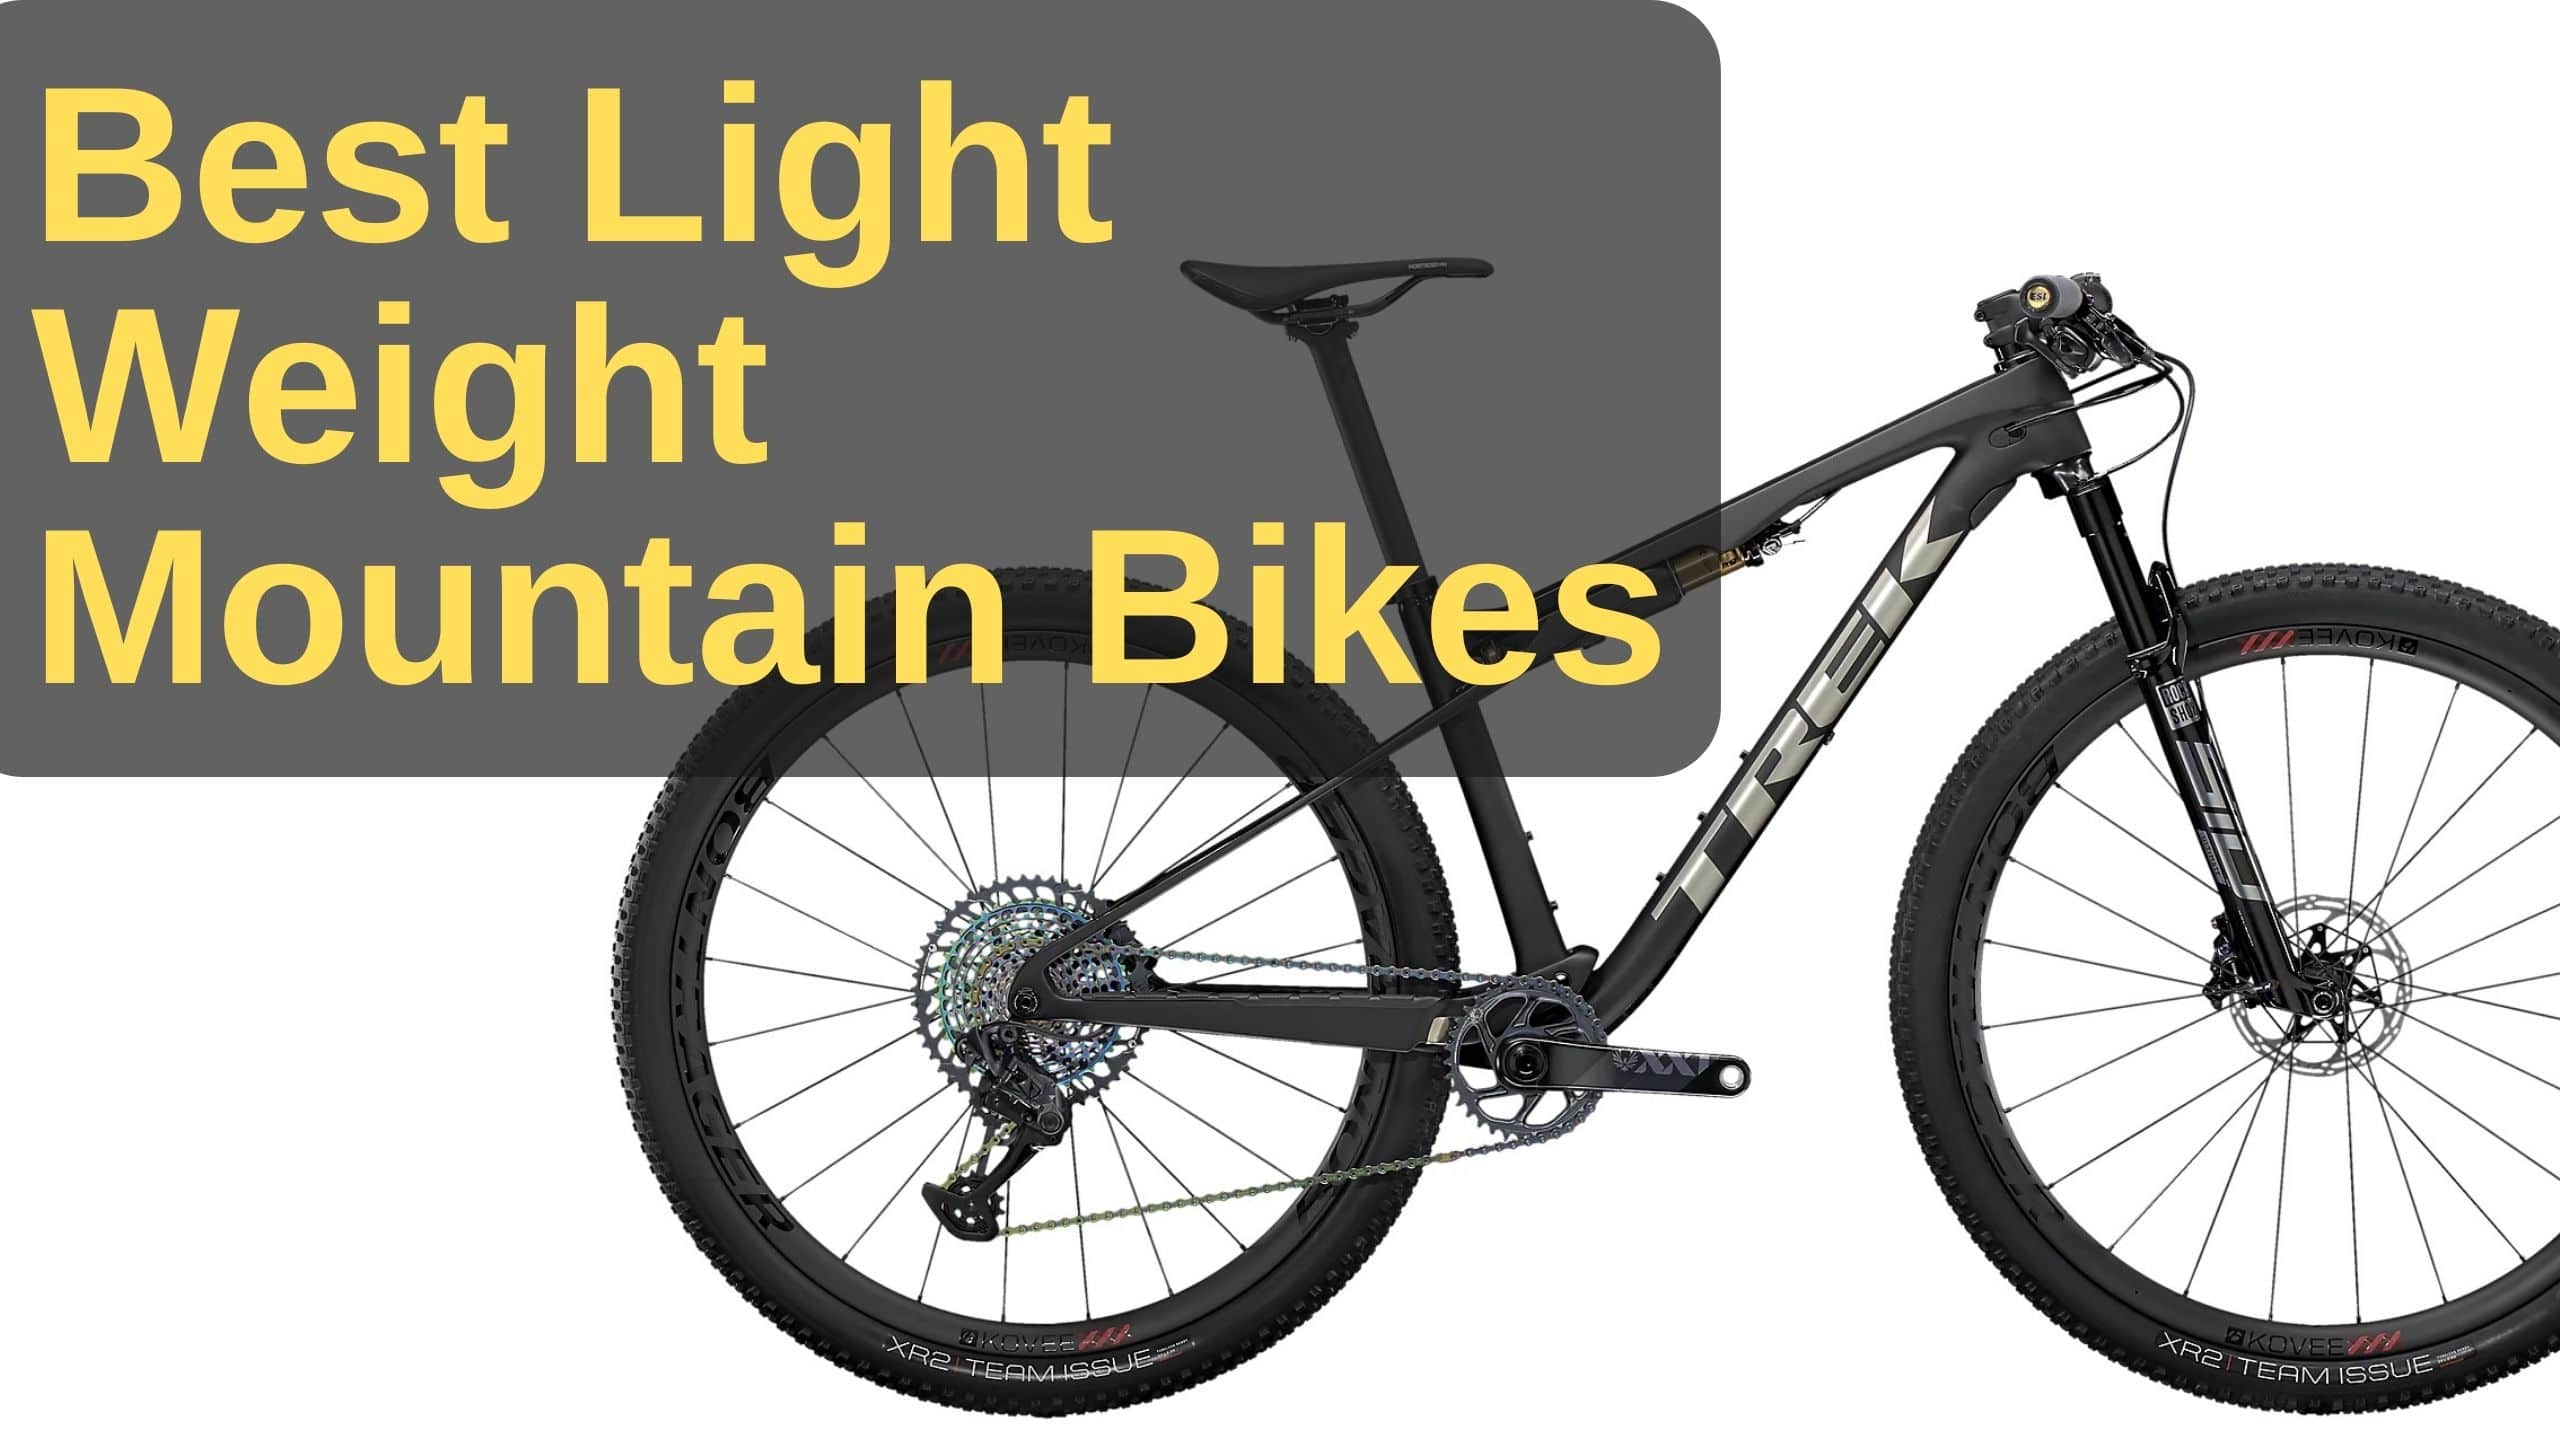 Best Light Weight Mountain Bikes